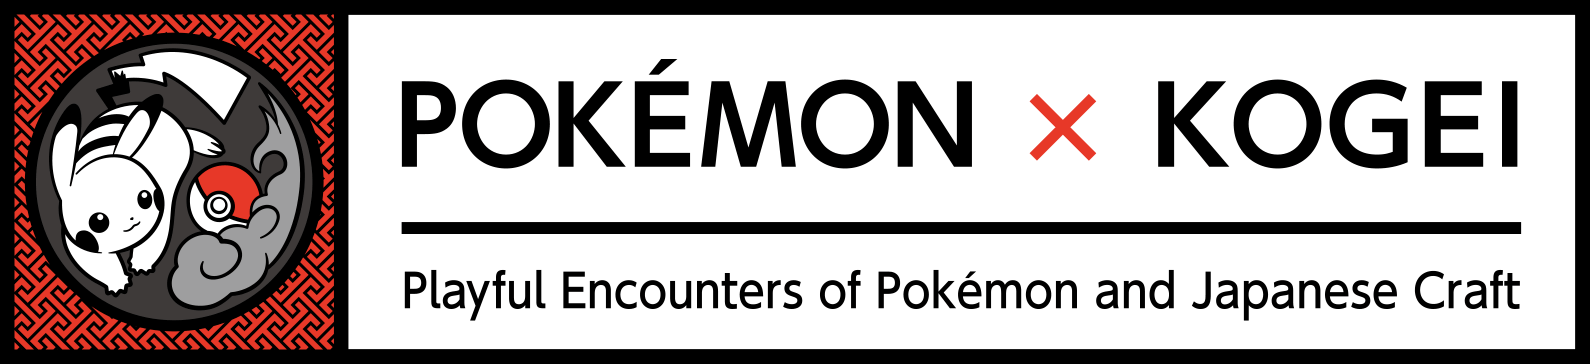 POKÉMON X KOGEI—Playful Encounters of Pokémon and Japanese Craft—